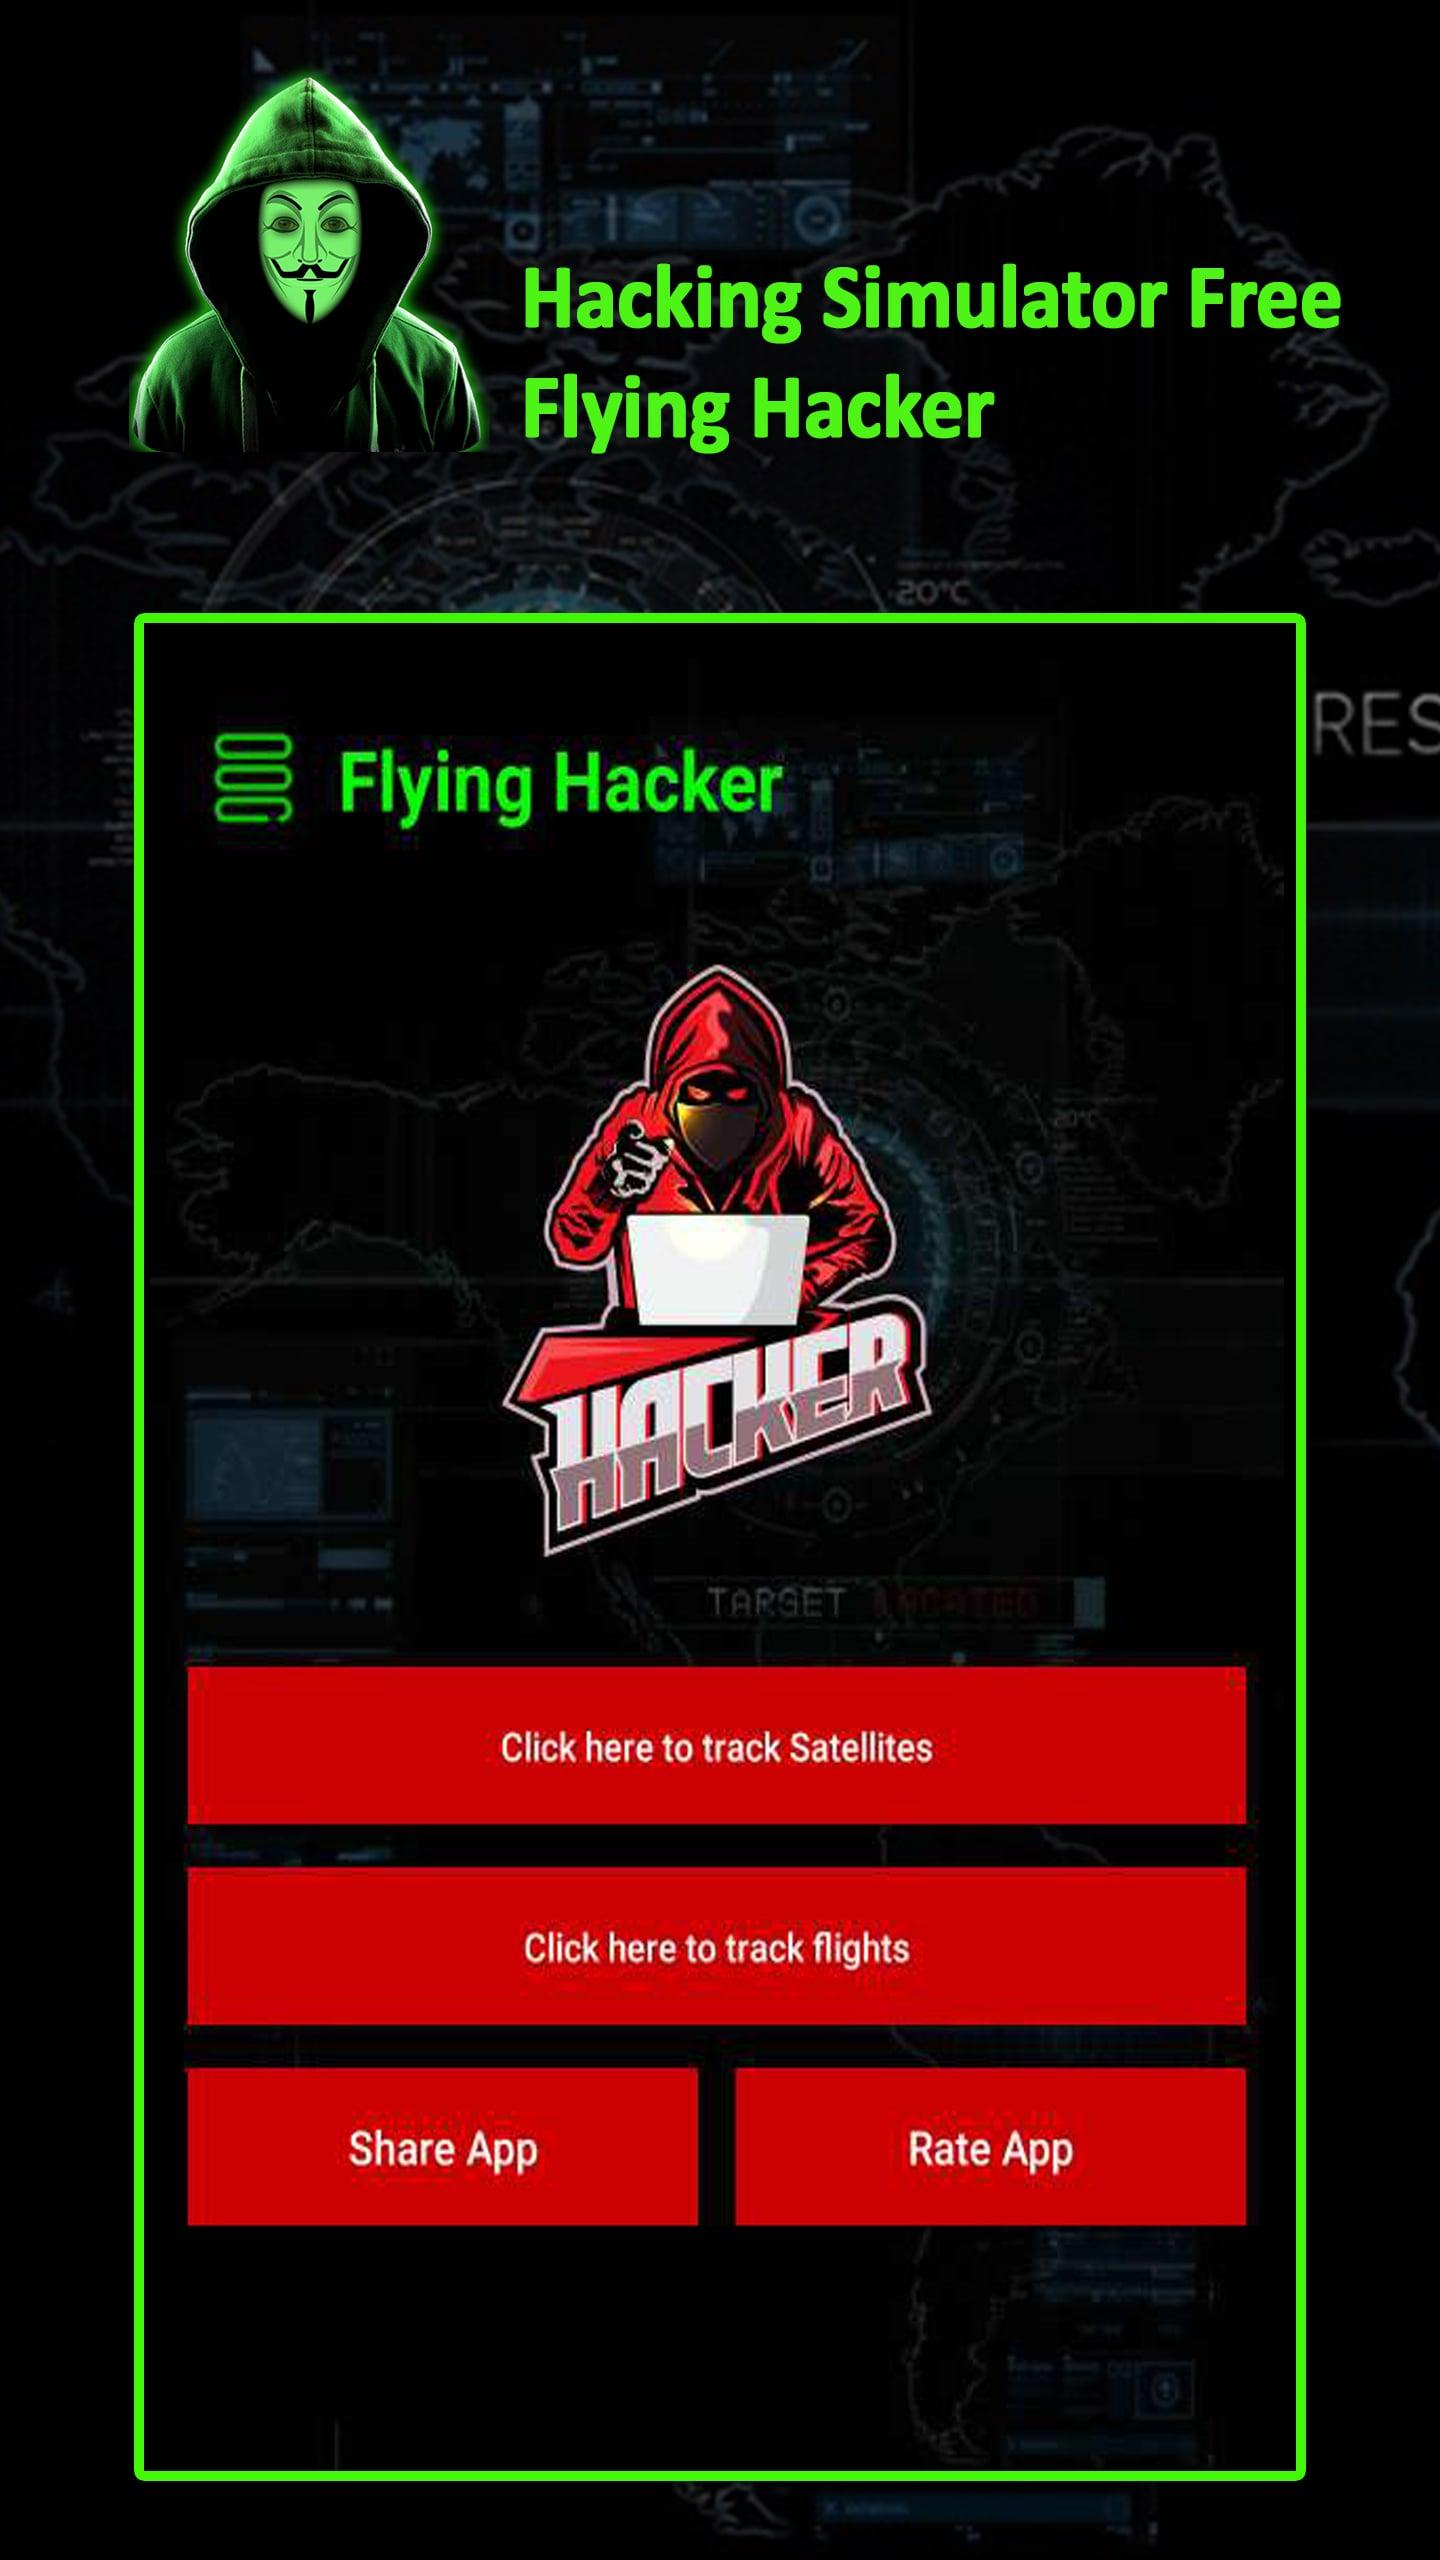 Hackers - Hacking Simulator Free, Flying Hacker APK voor Android Download